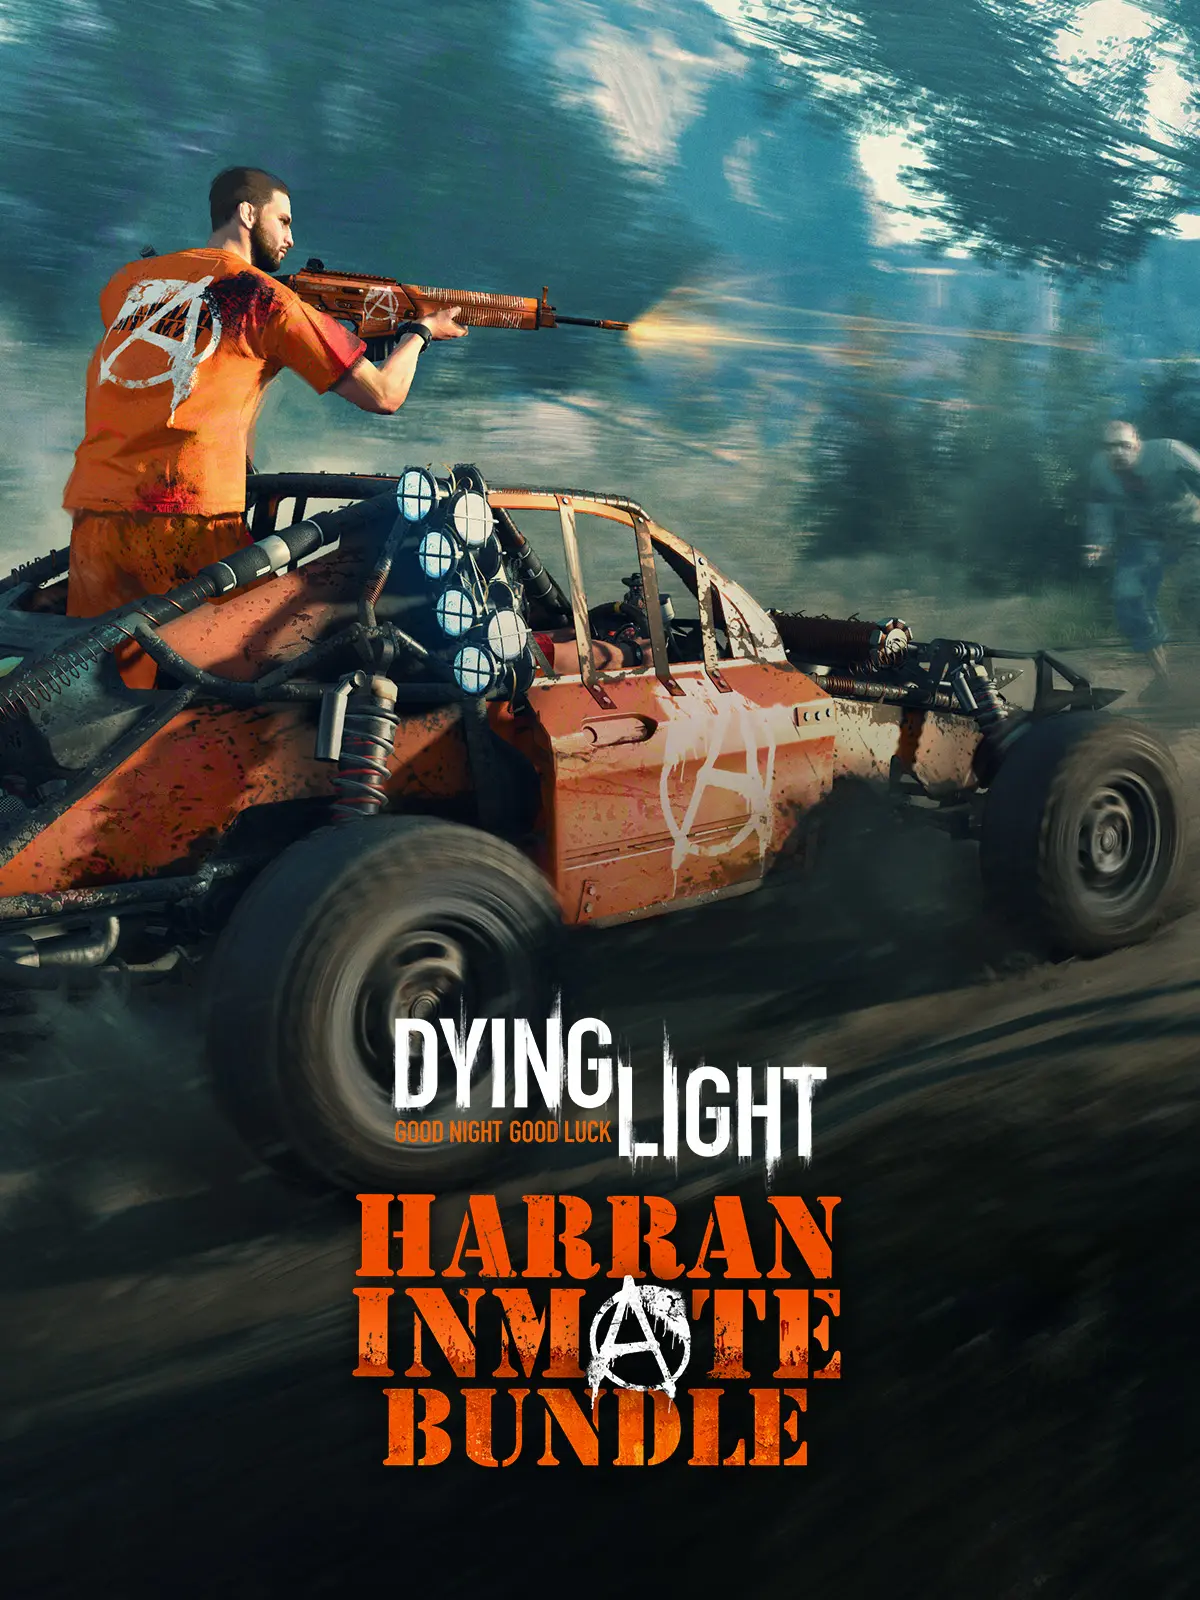 Dying Light - Harran Inmate Bundle DLC (PC / Mac / Linux) - Steam - Digital Code